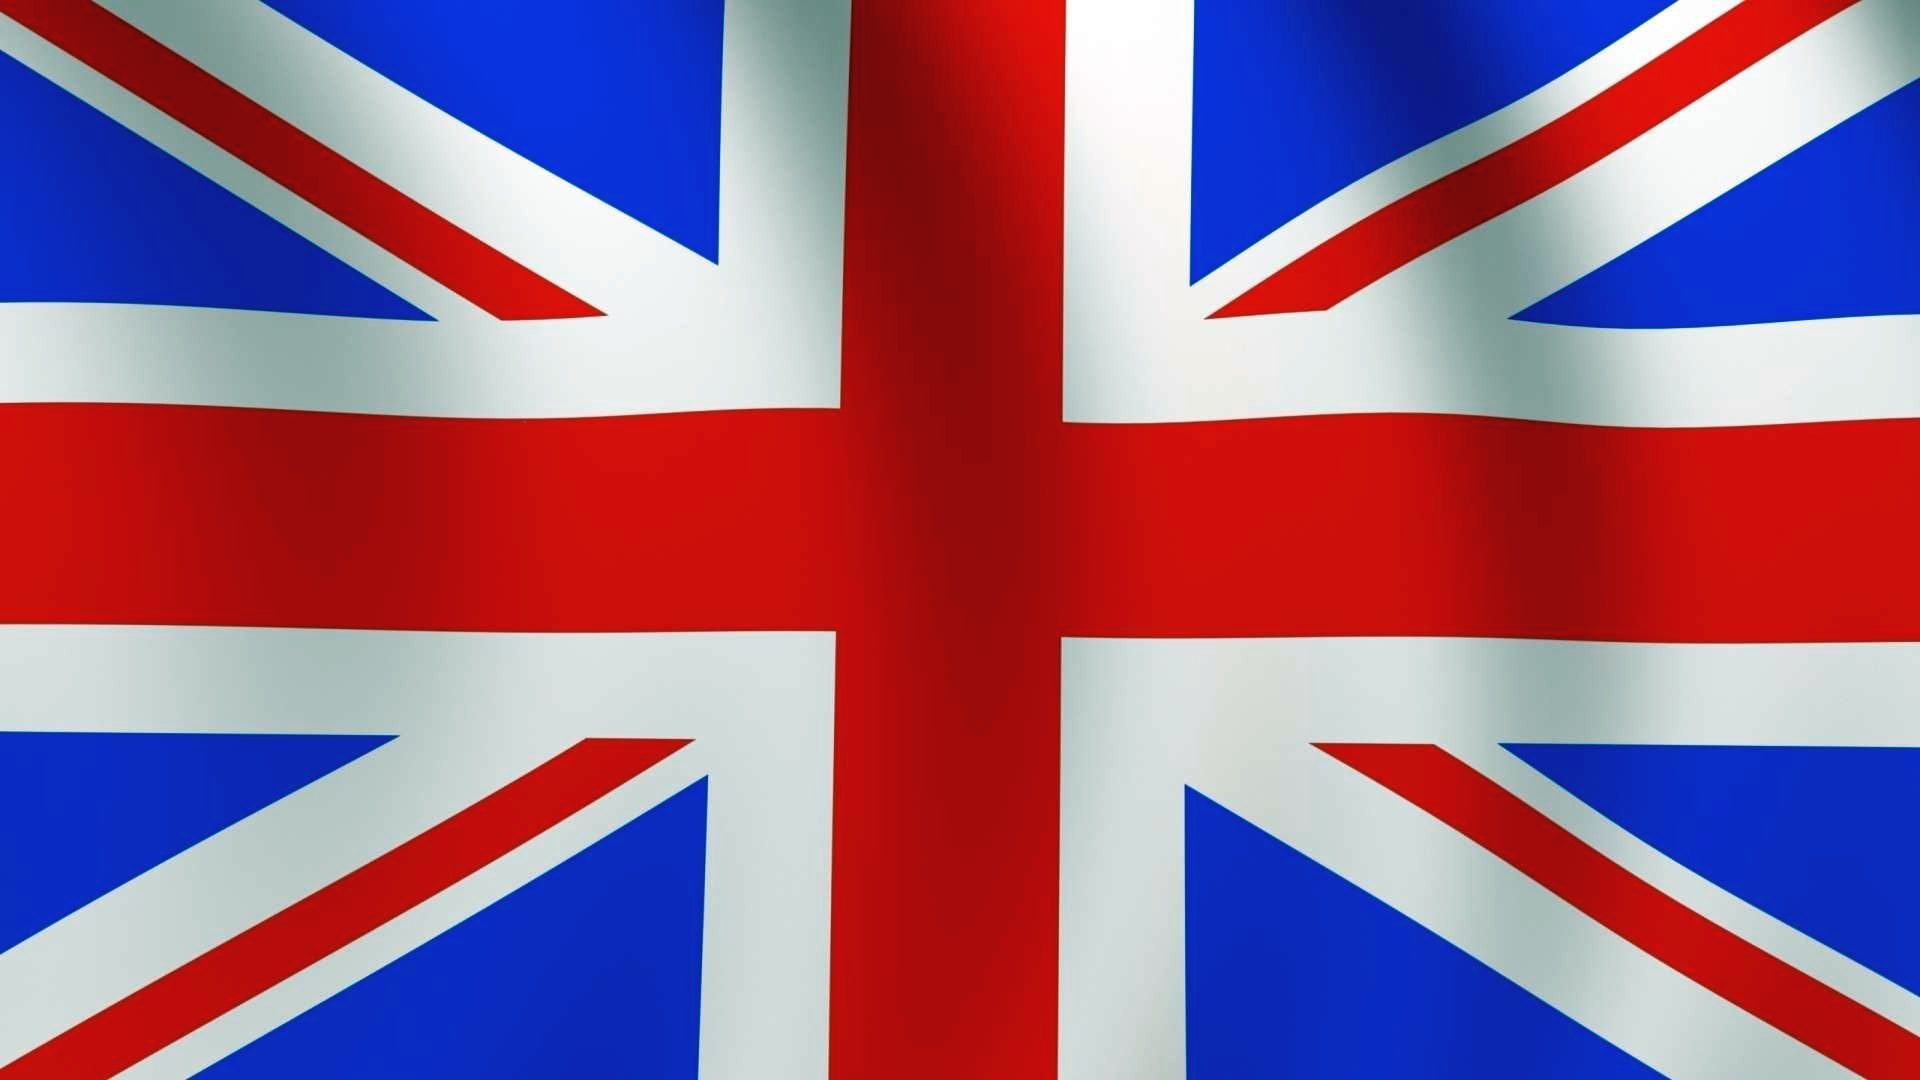 United Kingdom Flag - Wallpaper, High Definition, High Quality, Widescreen